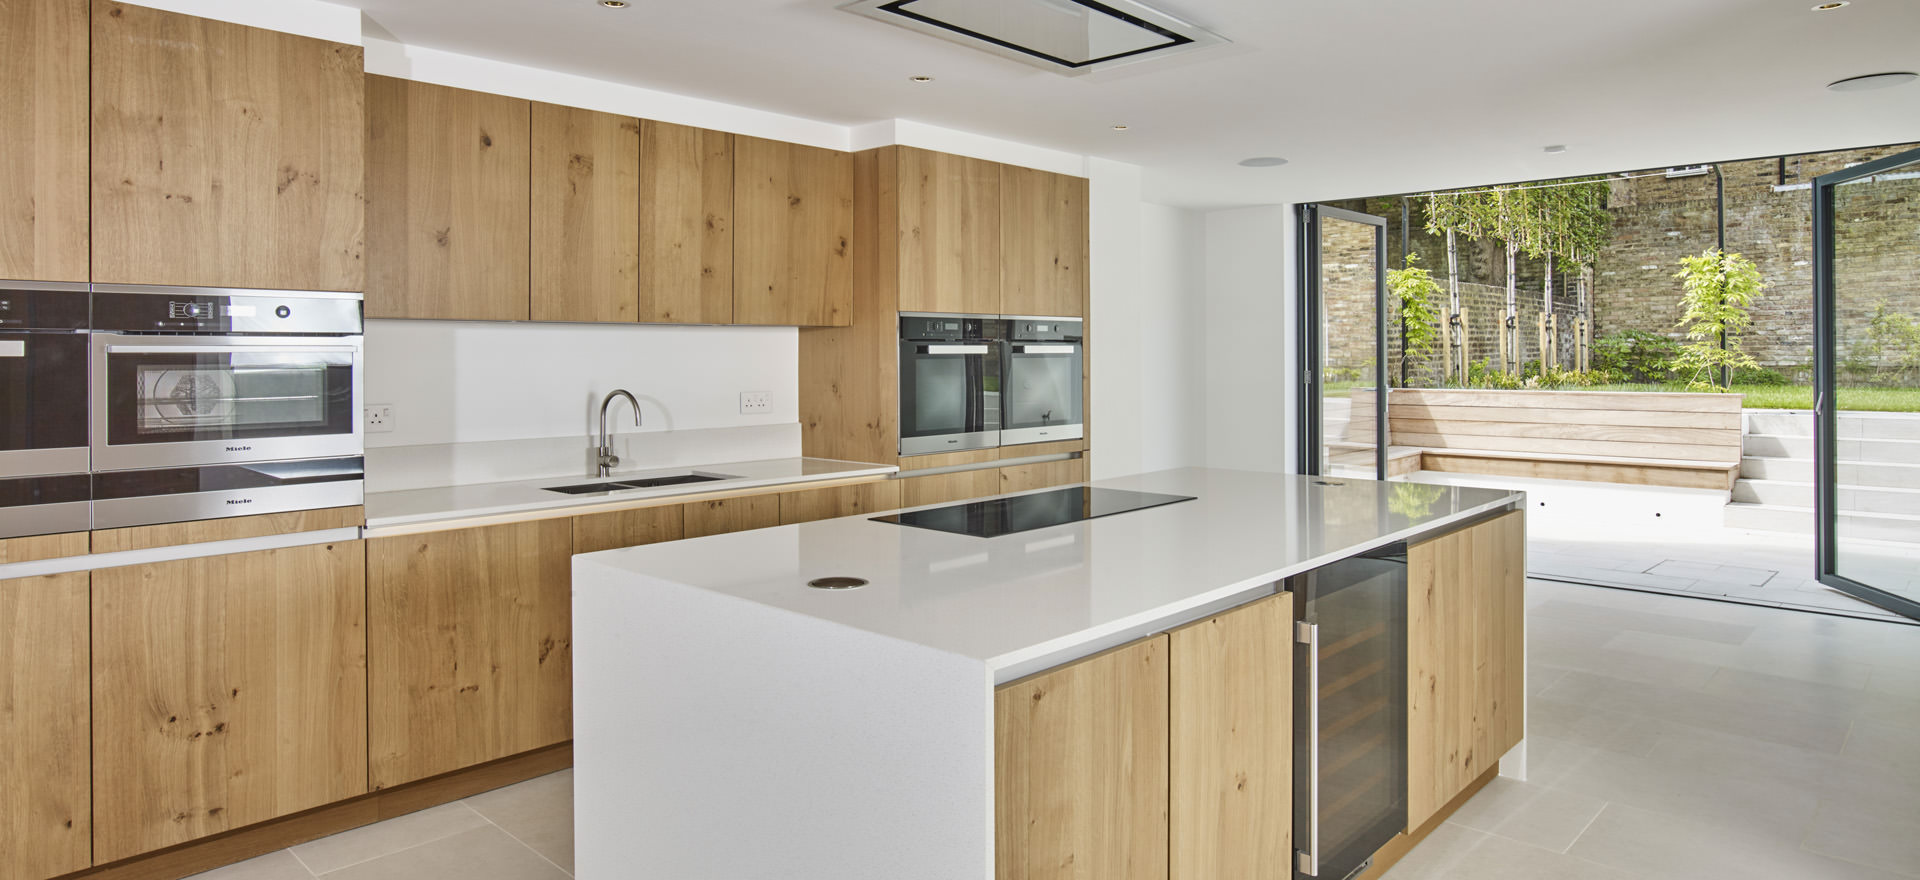 Kingsbury Development Completed Kitchen